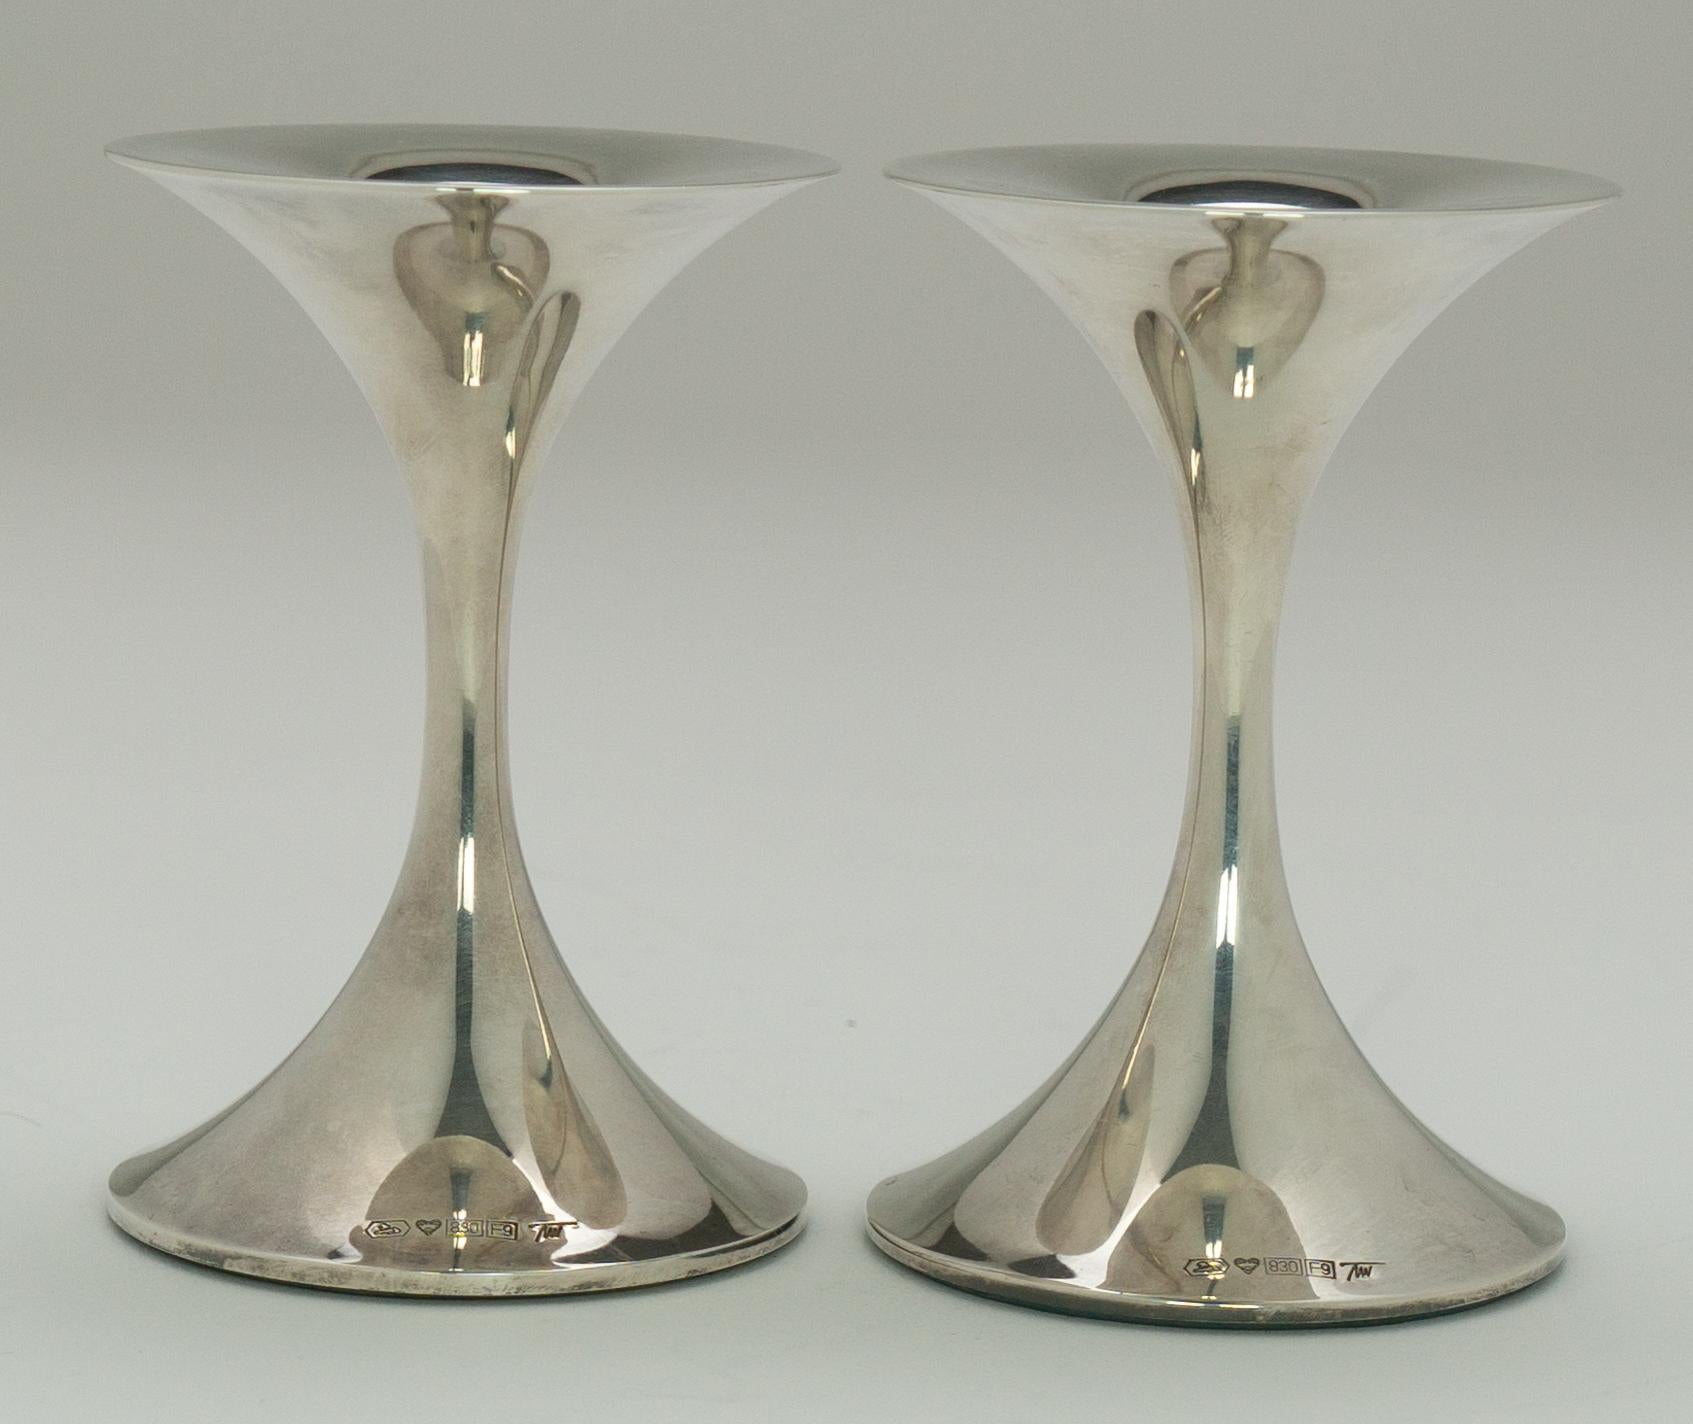 Pair of Silver “Trumpetti” Candlesticks Model TW 284, Designed by Tapio Wirkkala 1